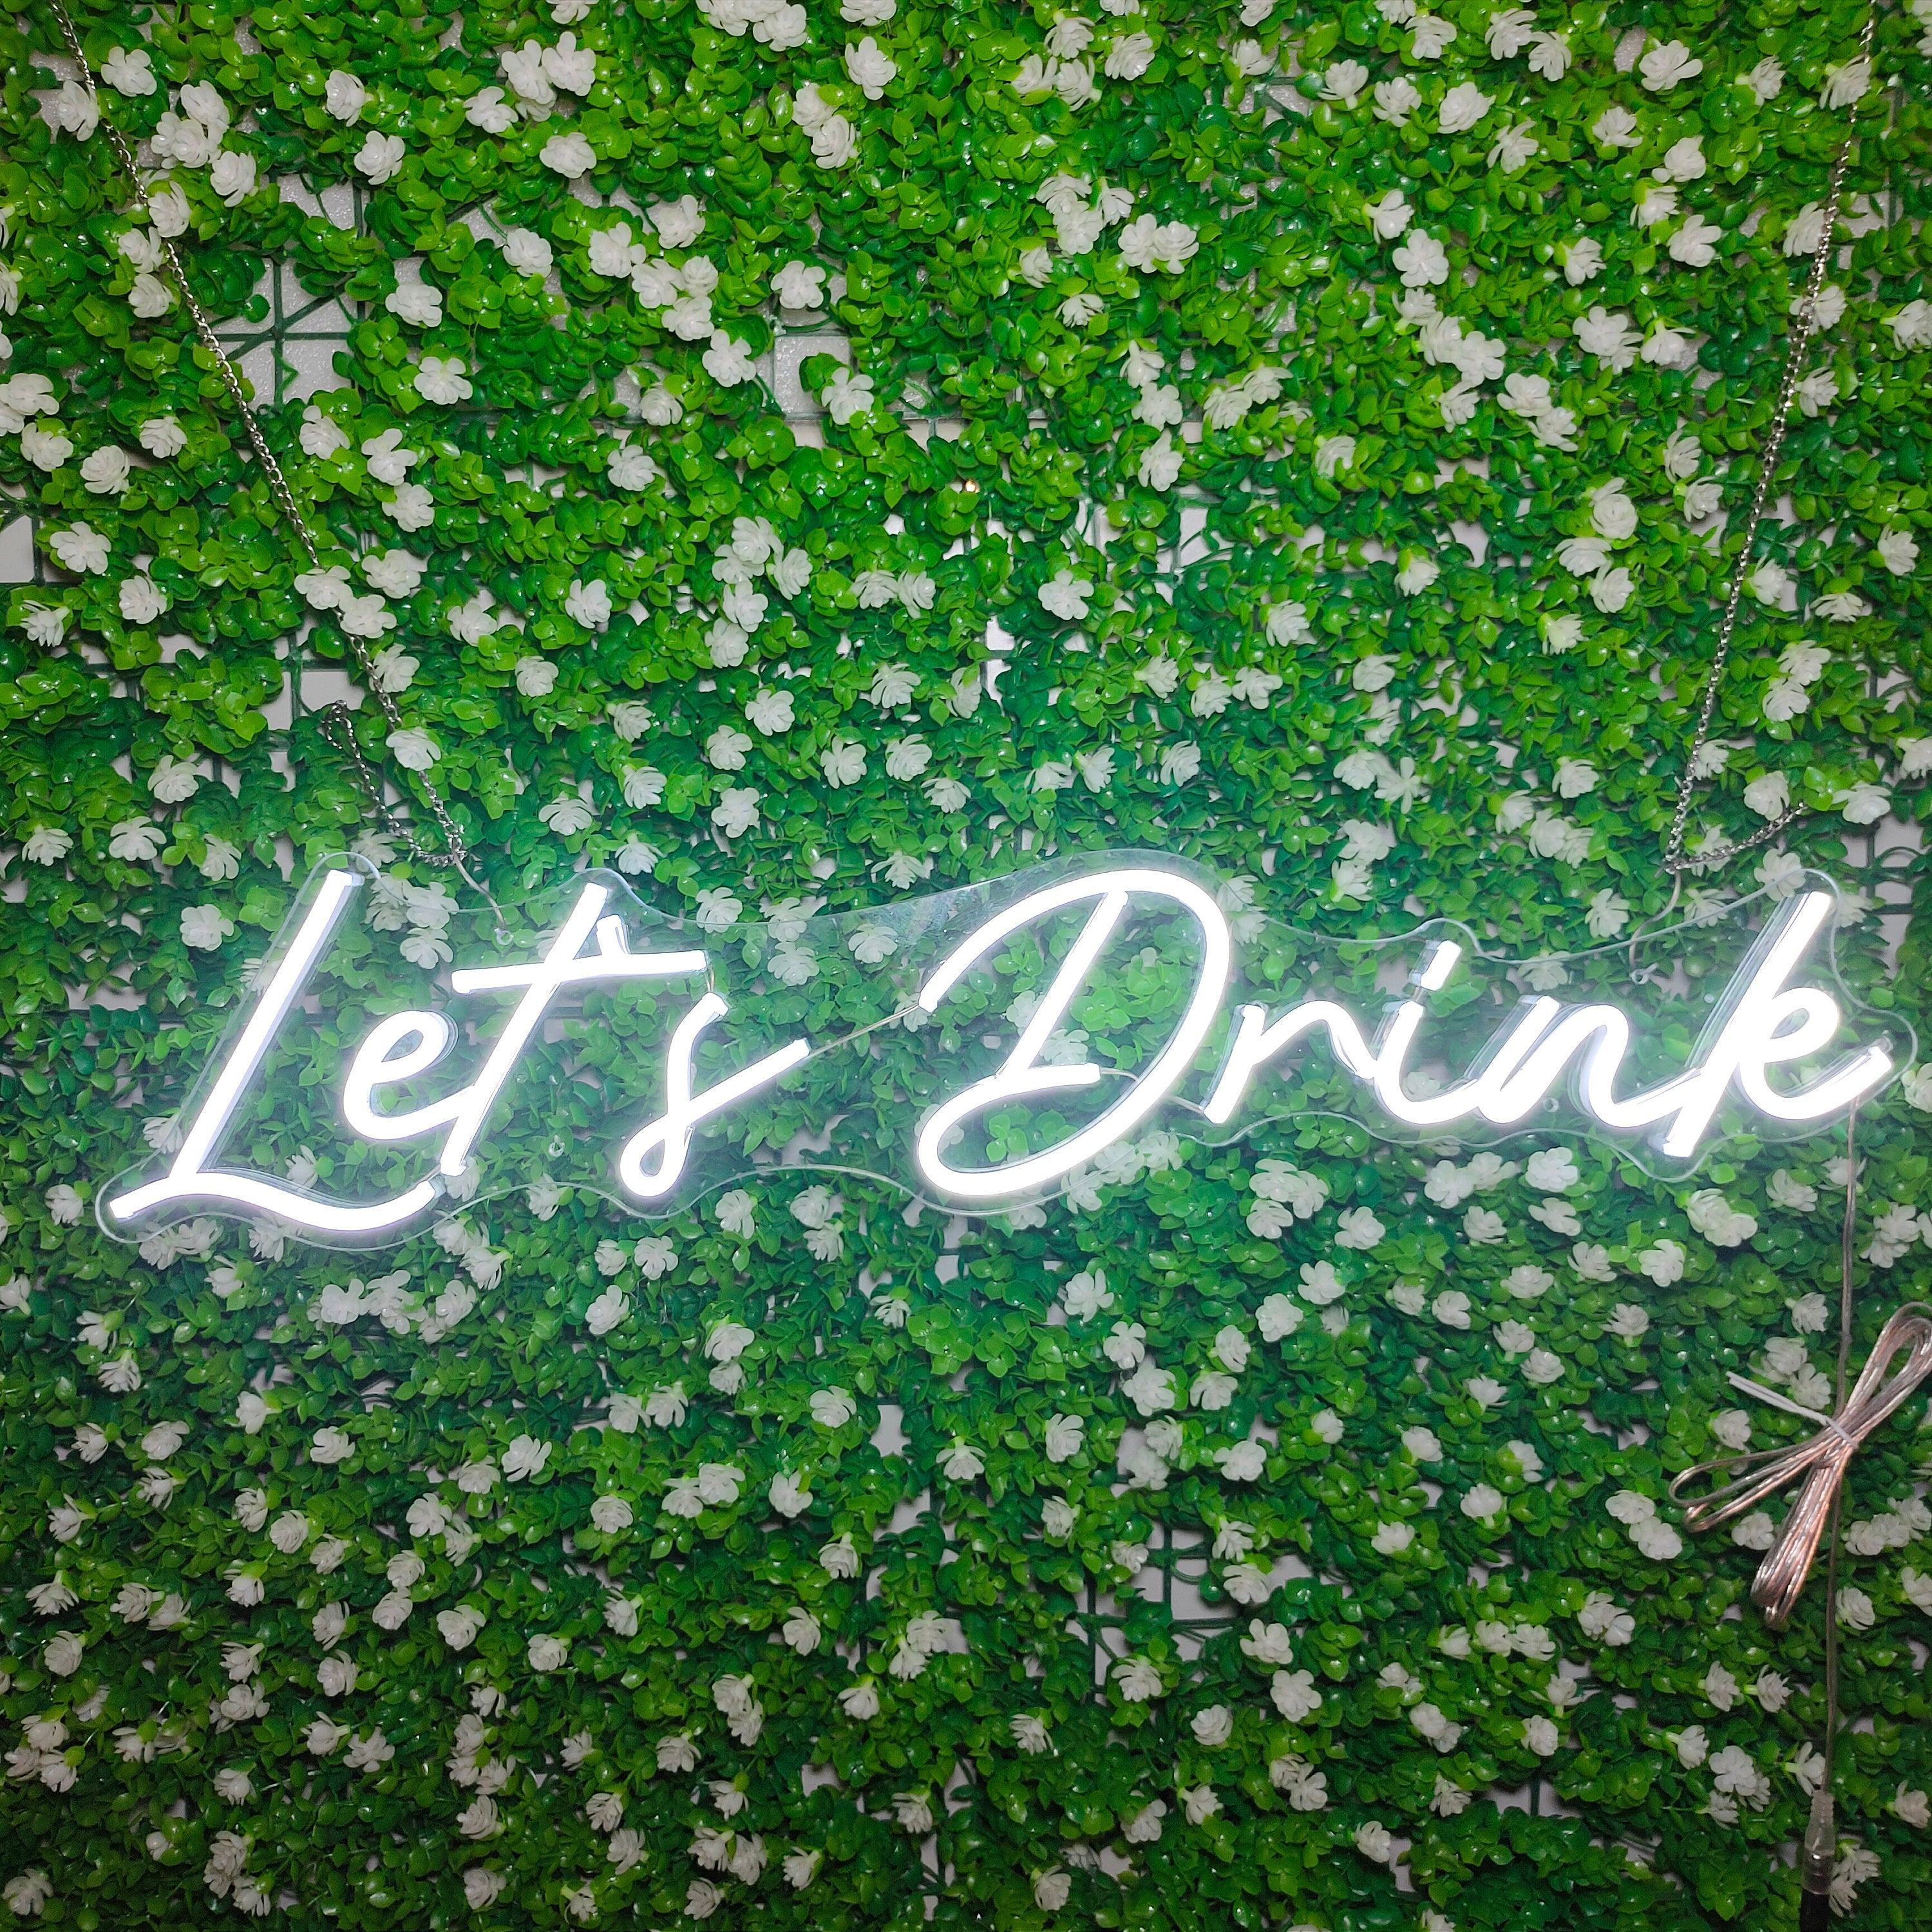 NEONIP-100% Handmade Let's Drink LED Neon Light Sign